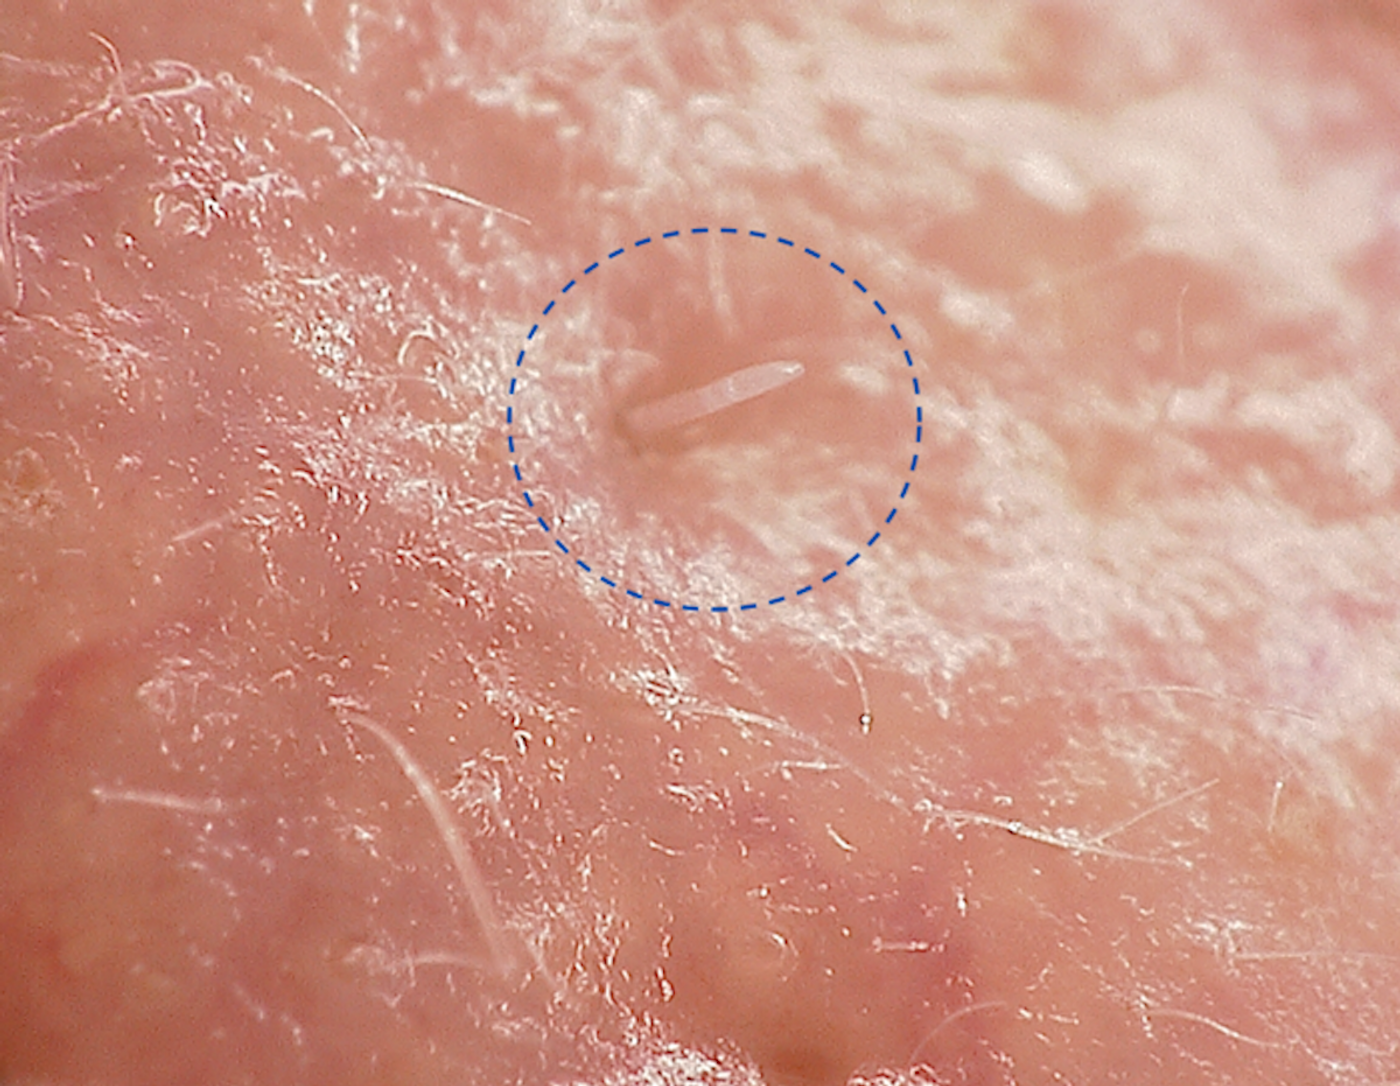 Image showing Demodex folliculorum mite on skin under Hirox microscope / Credit : University of Reading